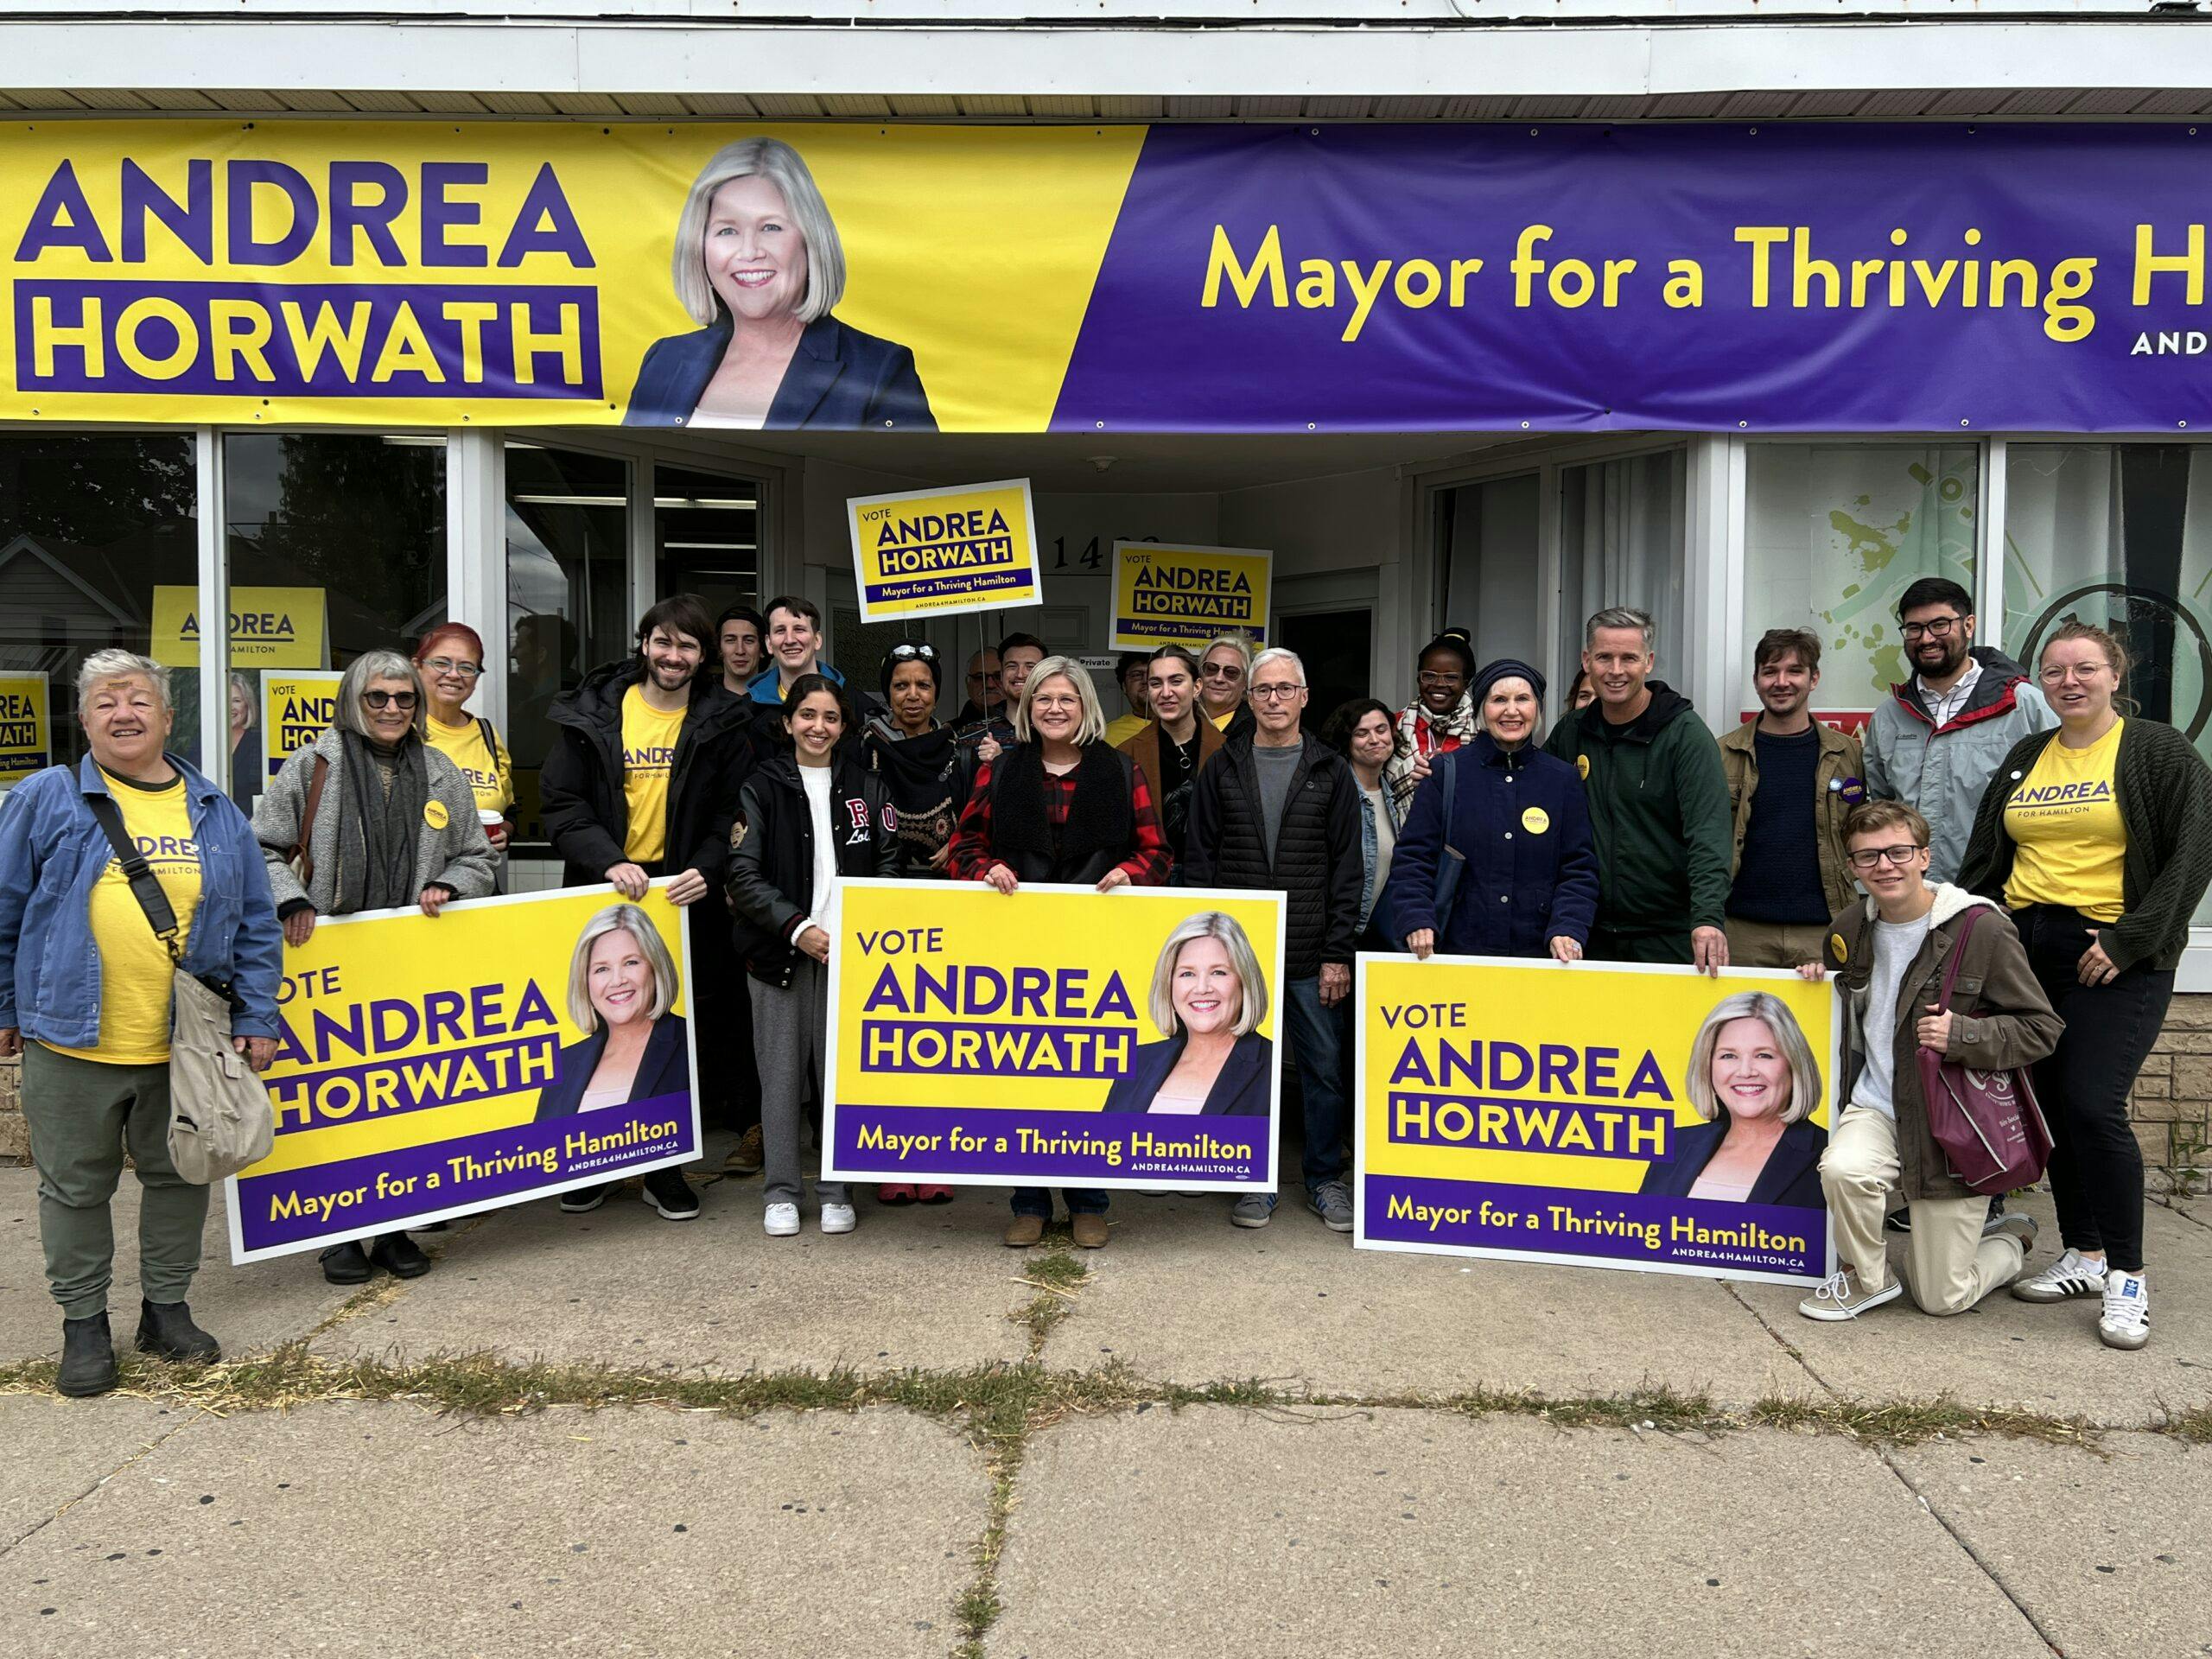 Andrea Horwath leads in Hamilton’s mayoral race